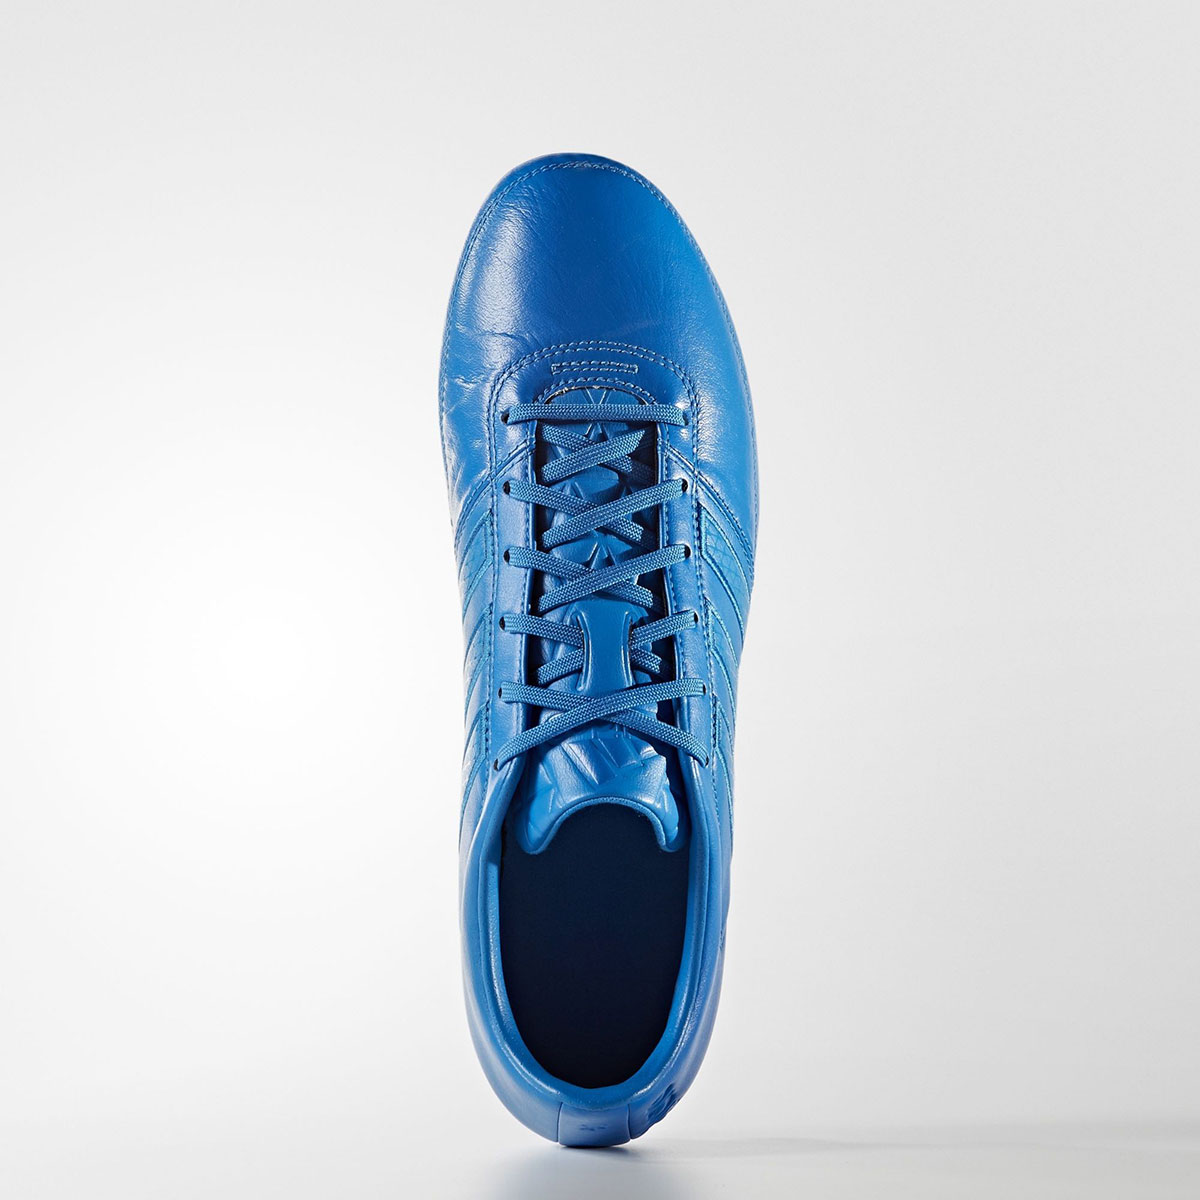 adidas Gloro 16.1 FG blue   BB3784